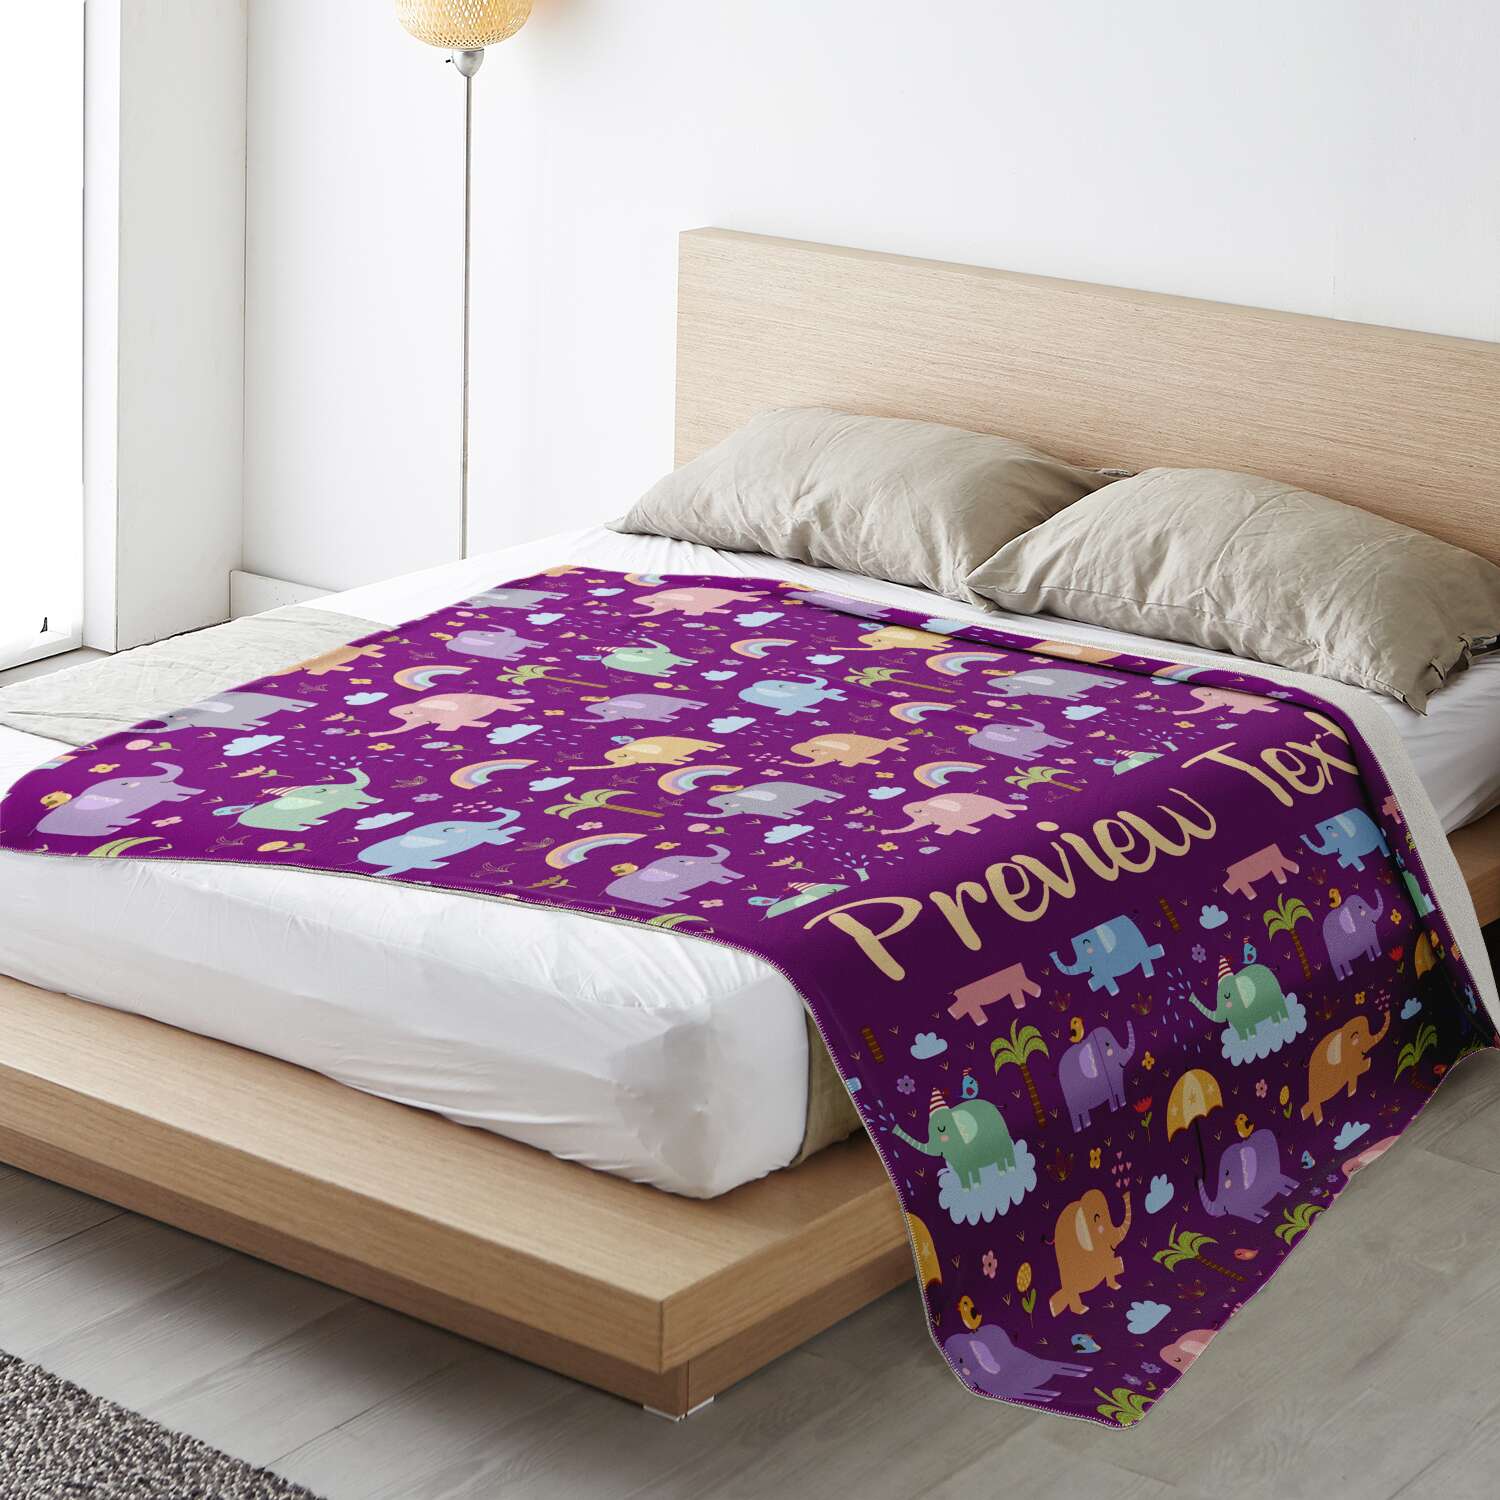 Personalized Name Elephant Pattern Purple Blanket for Kids, Girls & Boys